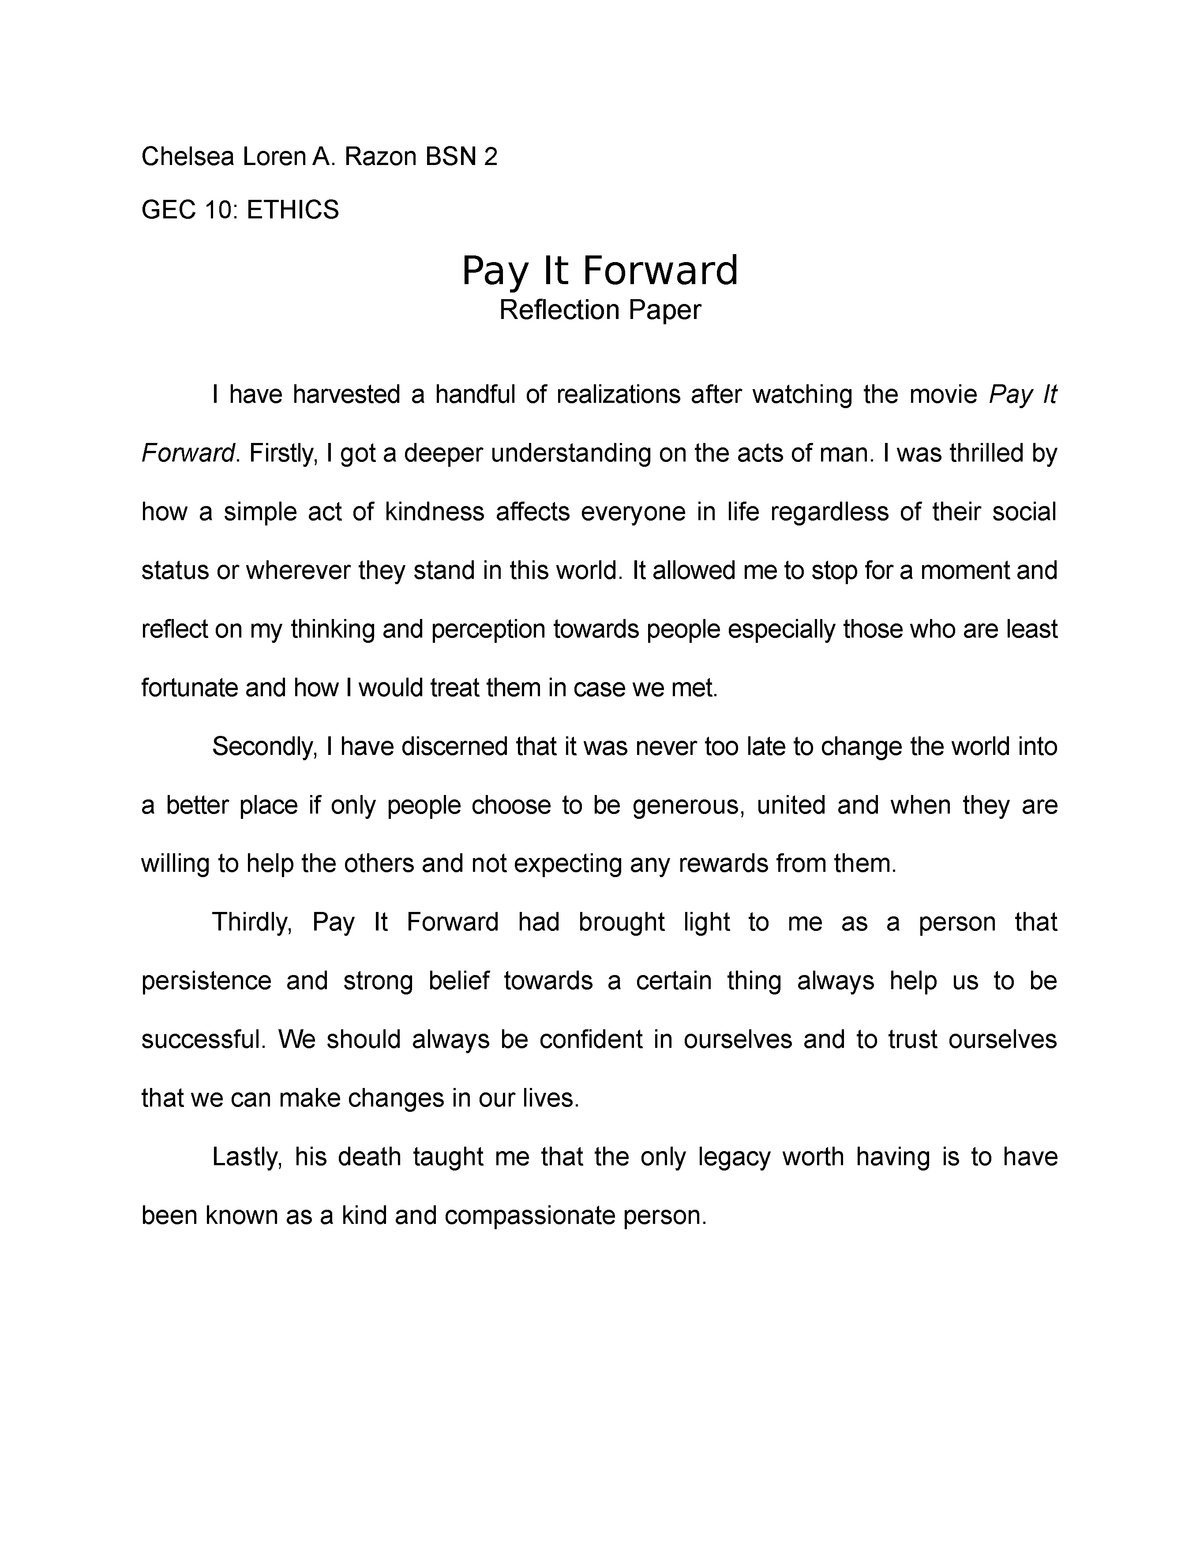 pay it forward reflection essay